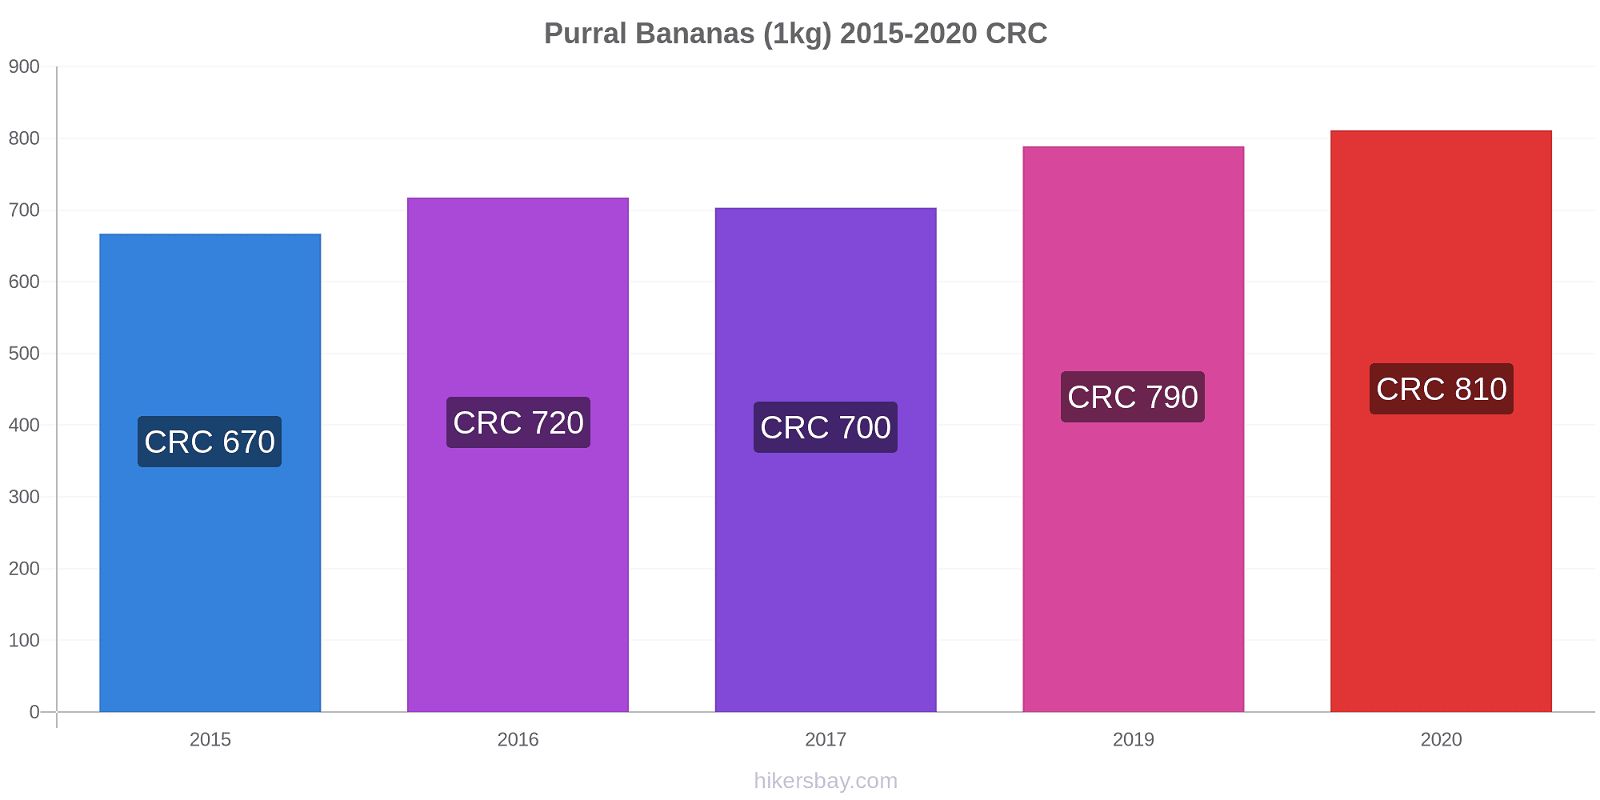 Purral price changes Bananas (1kg) hikersbay.com